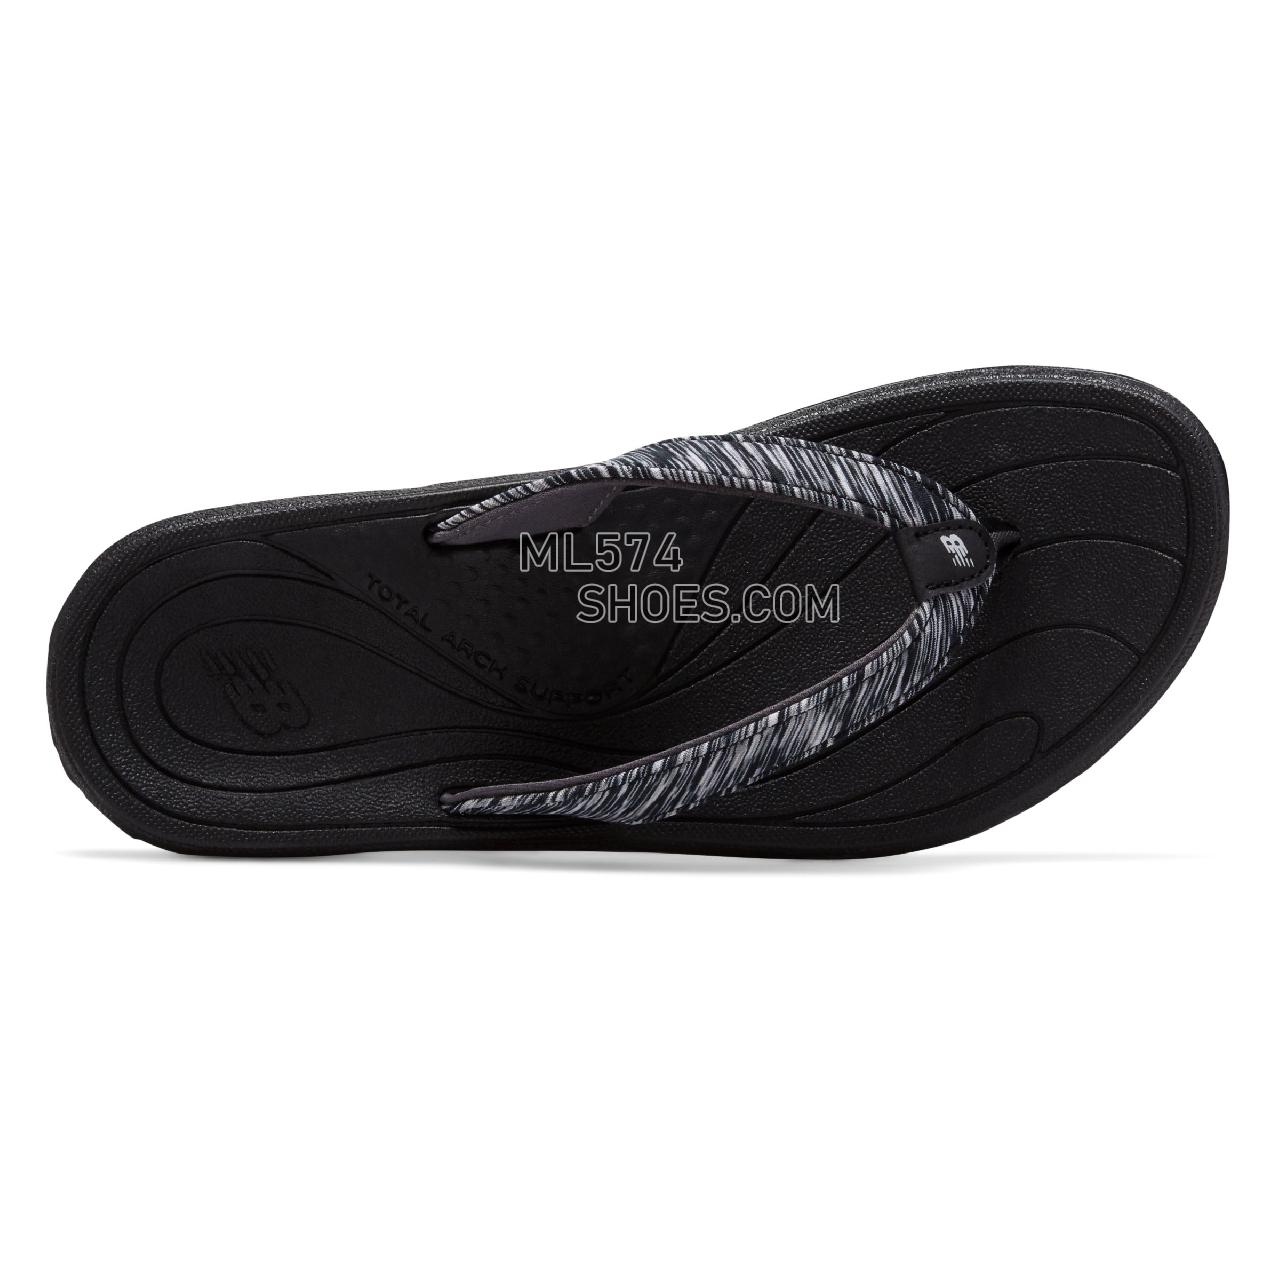 New Balance Cush+ Heathered Thong - Women's 6073 - Sandals Black with White - W6073BK